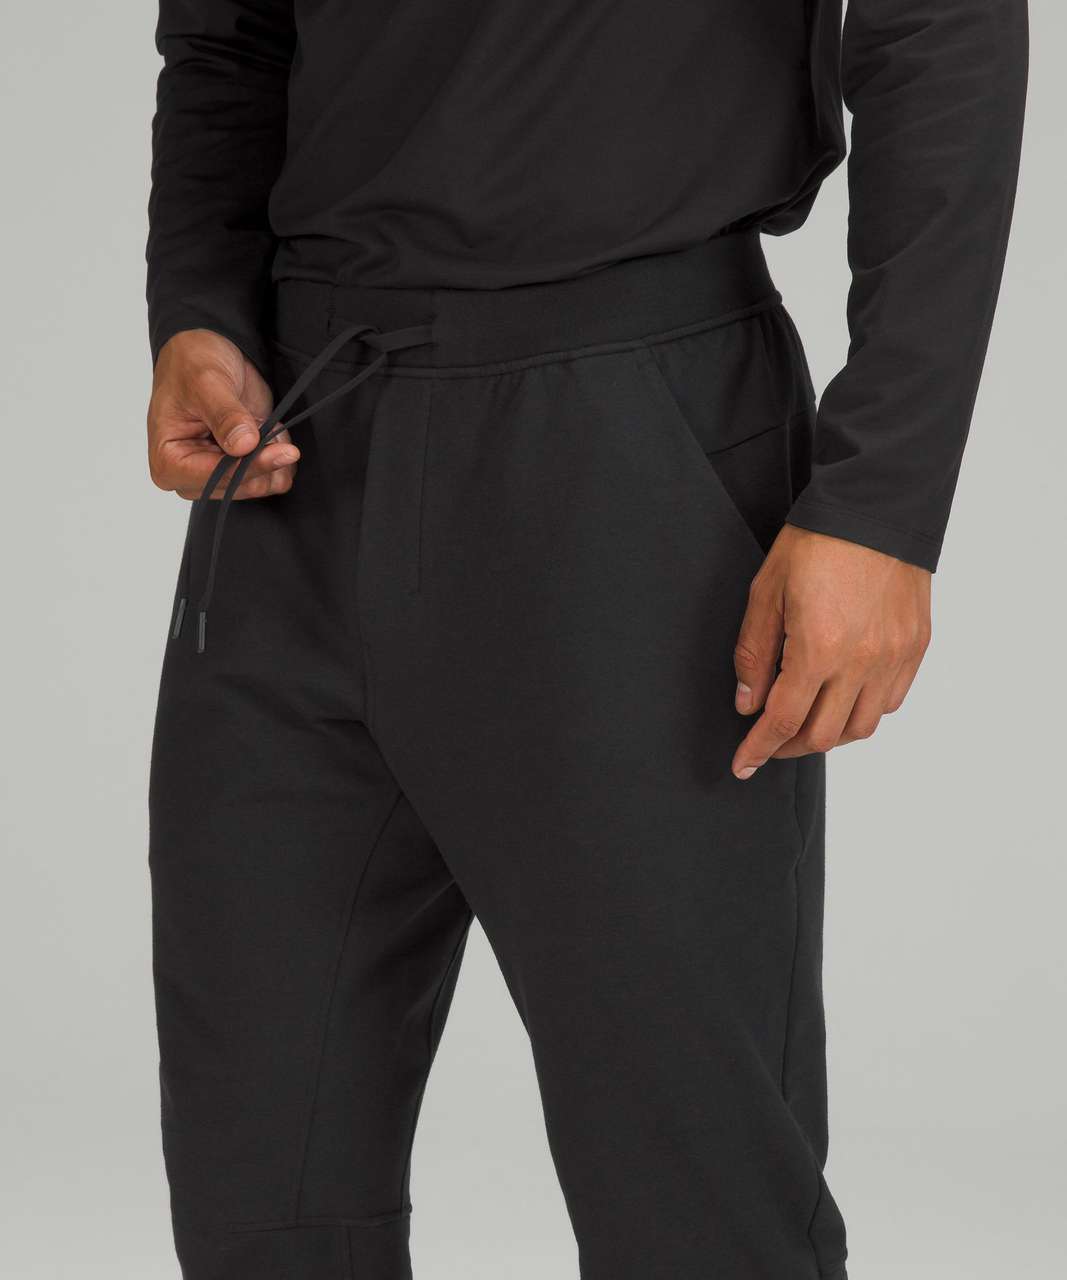 Lululemon City Sweat Mens Black Drawstring Joggers Sweatpants Size Medium